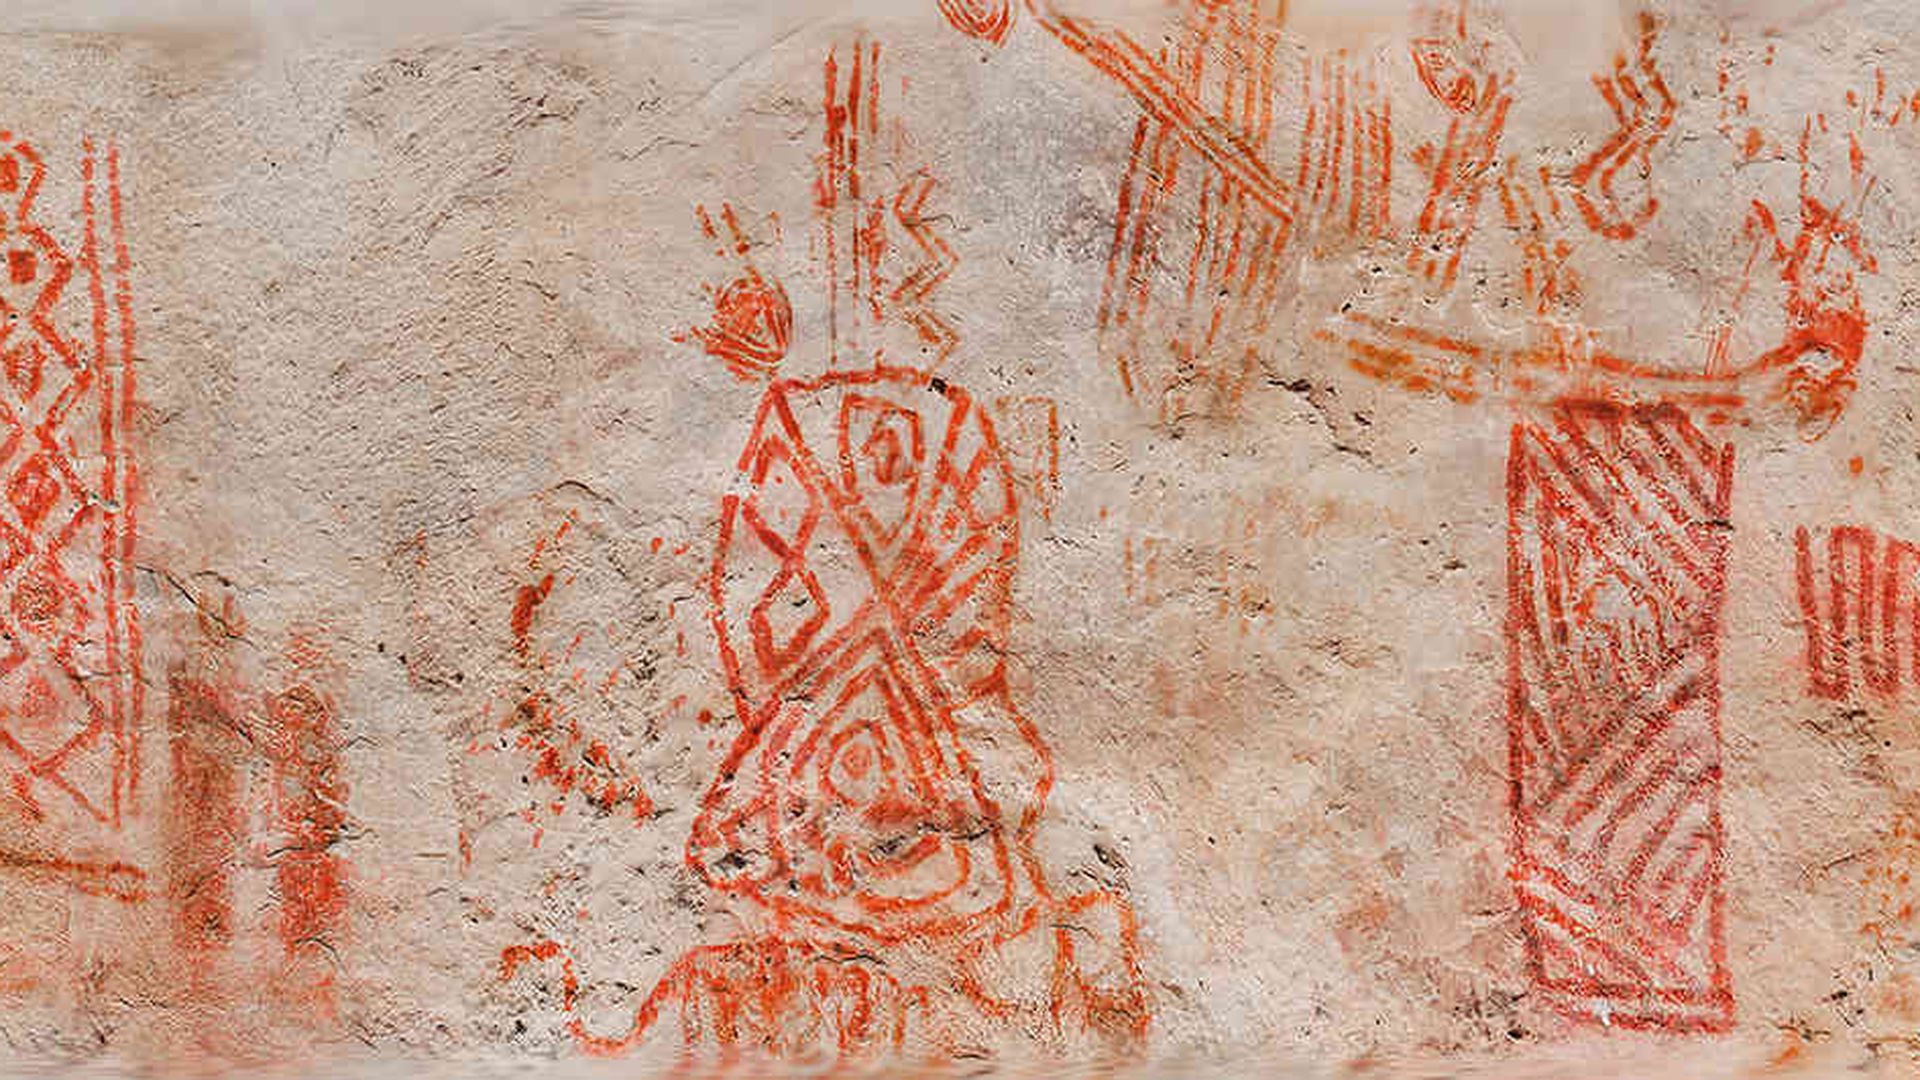 Pinturas rupestres muisca